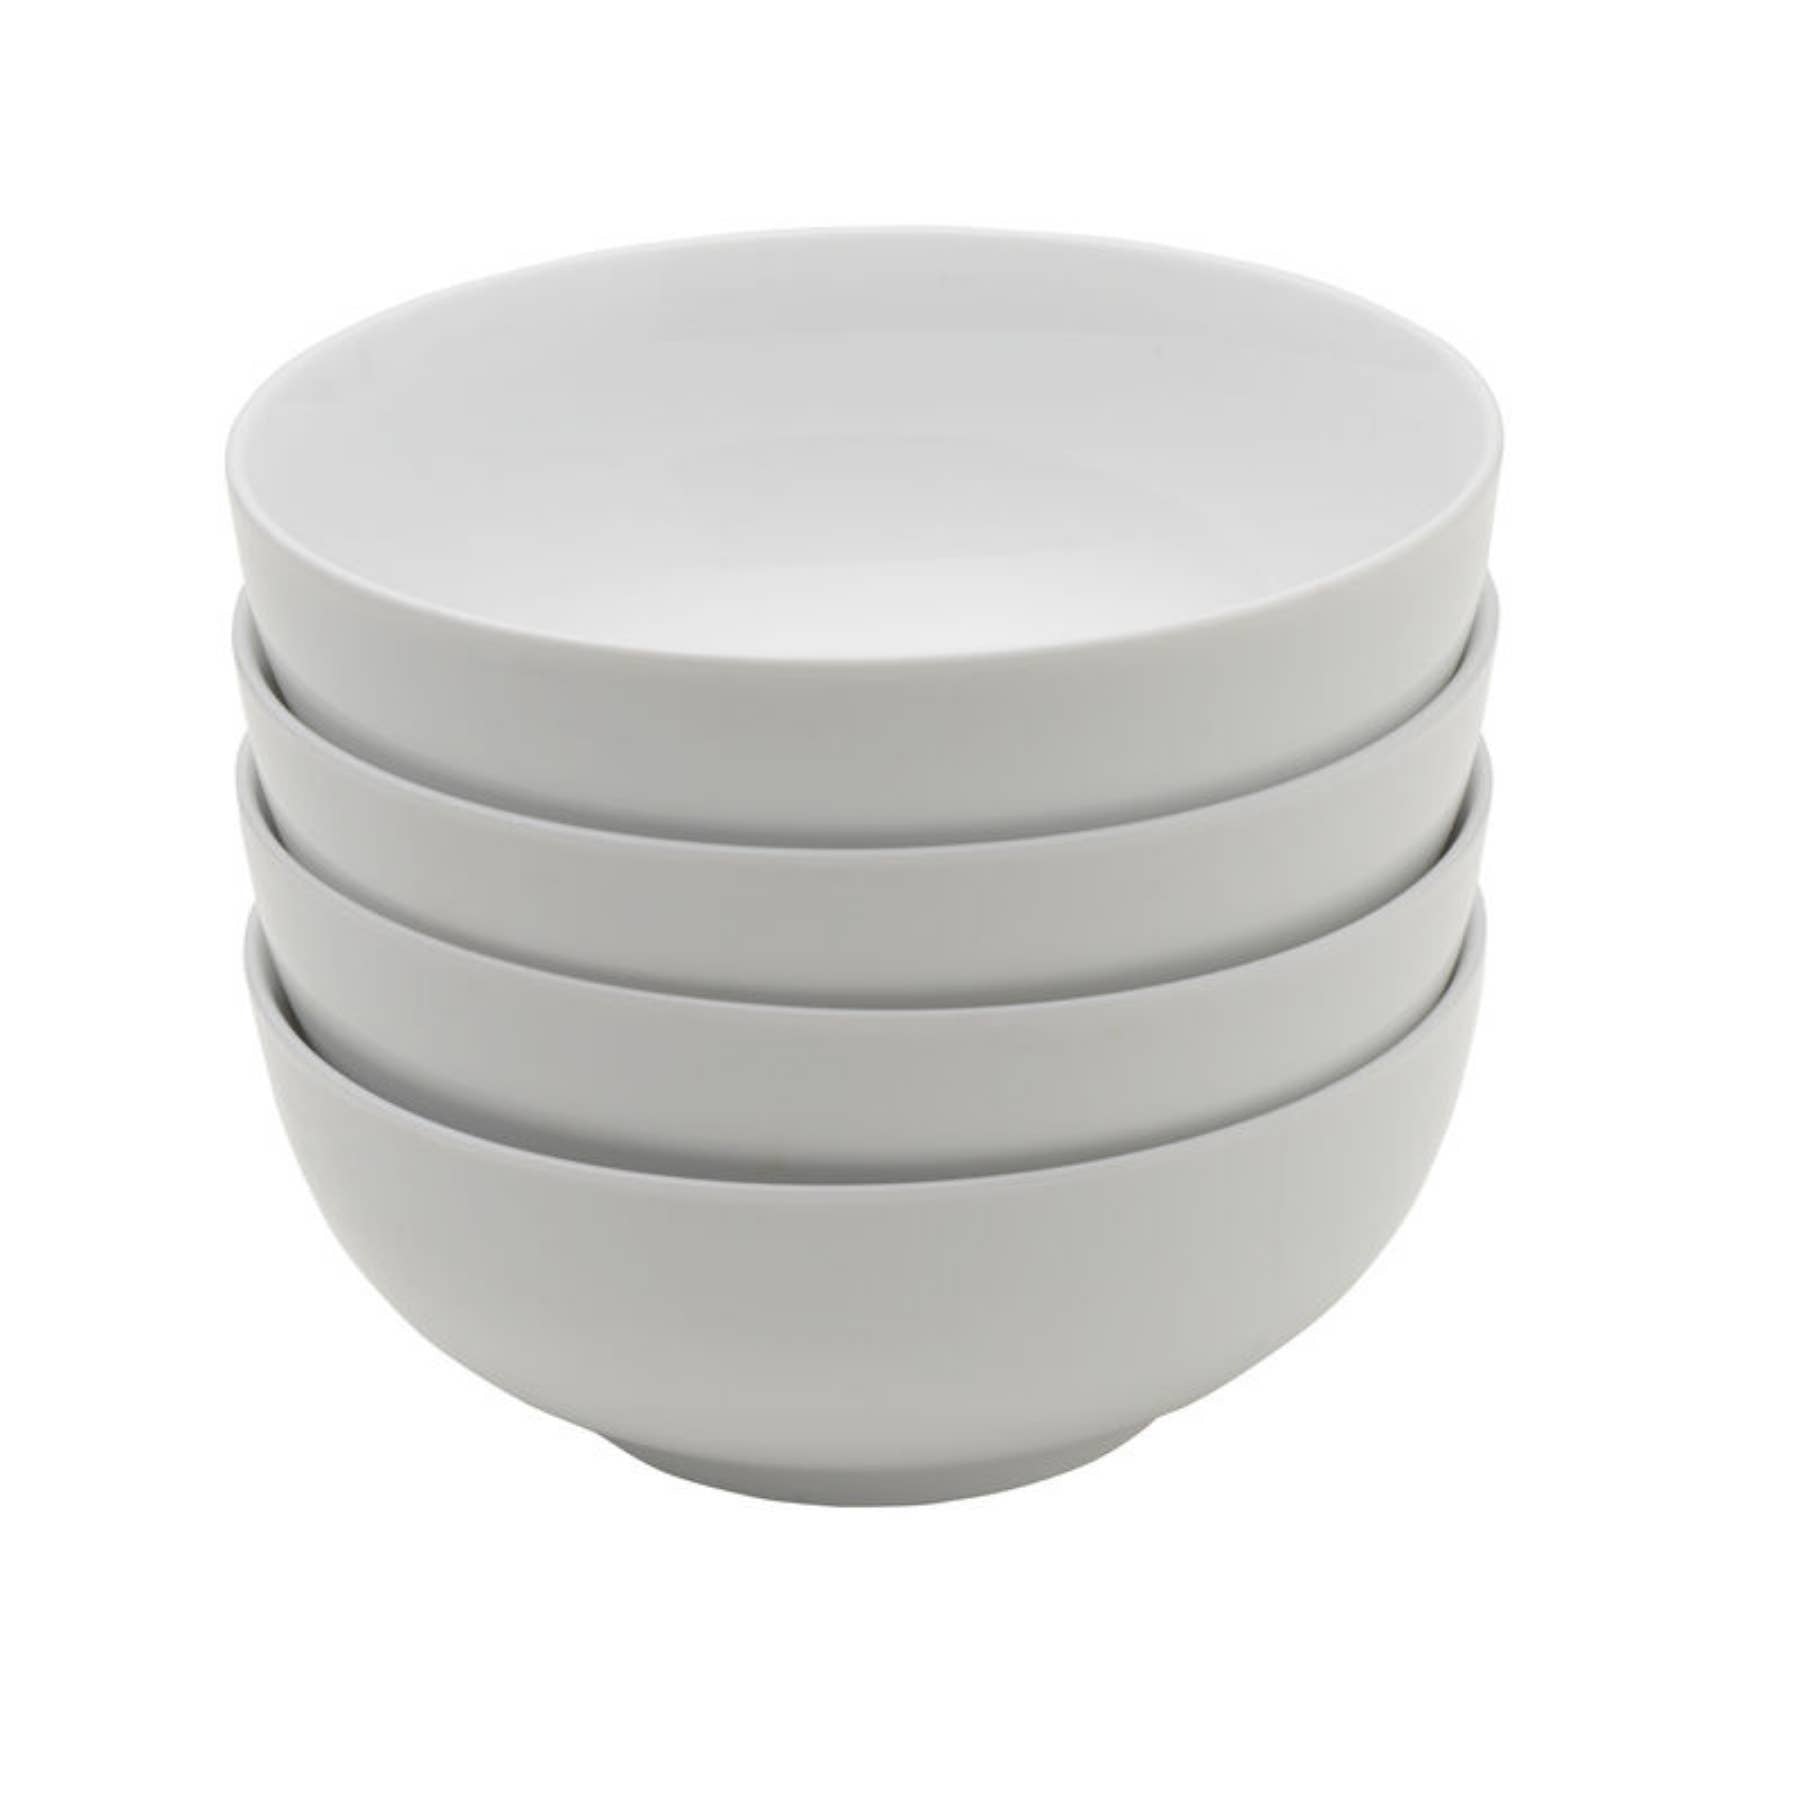 Everyday White Cereal Bowl S/4 26 OZ. Timothy De Clue Collection